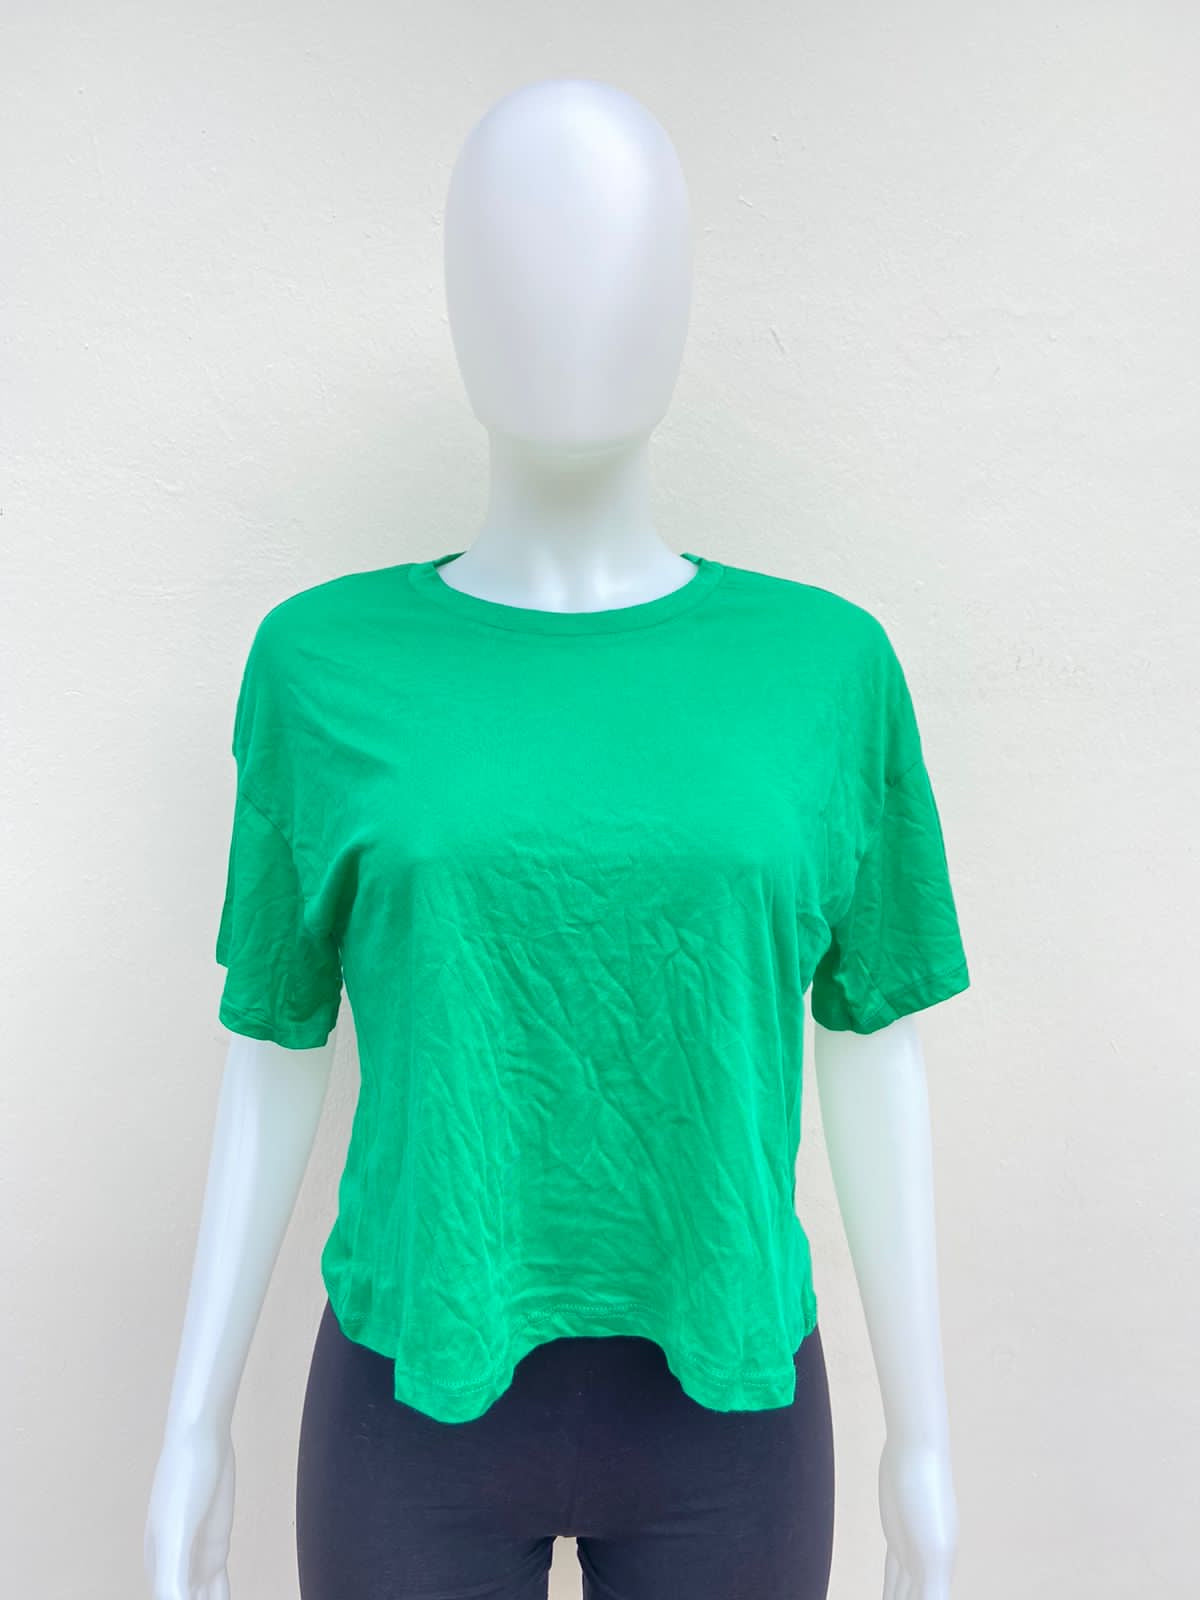 Top/t-shirt AMBIANCE original, verde liso.